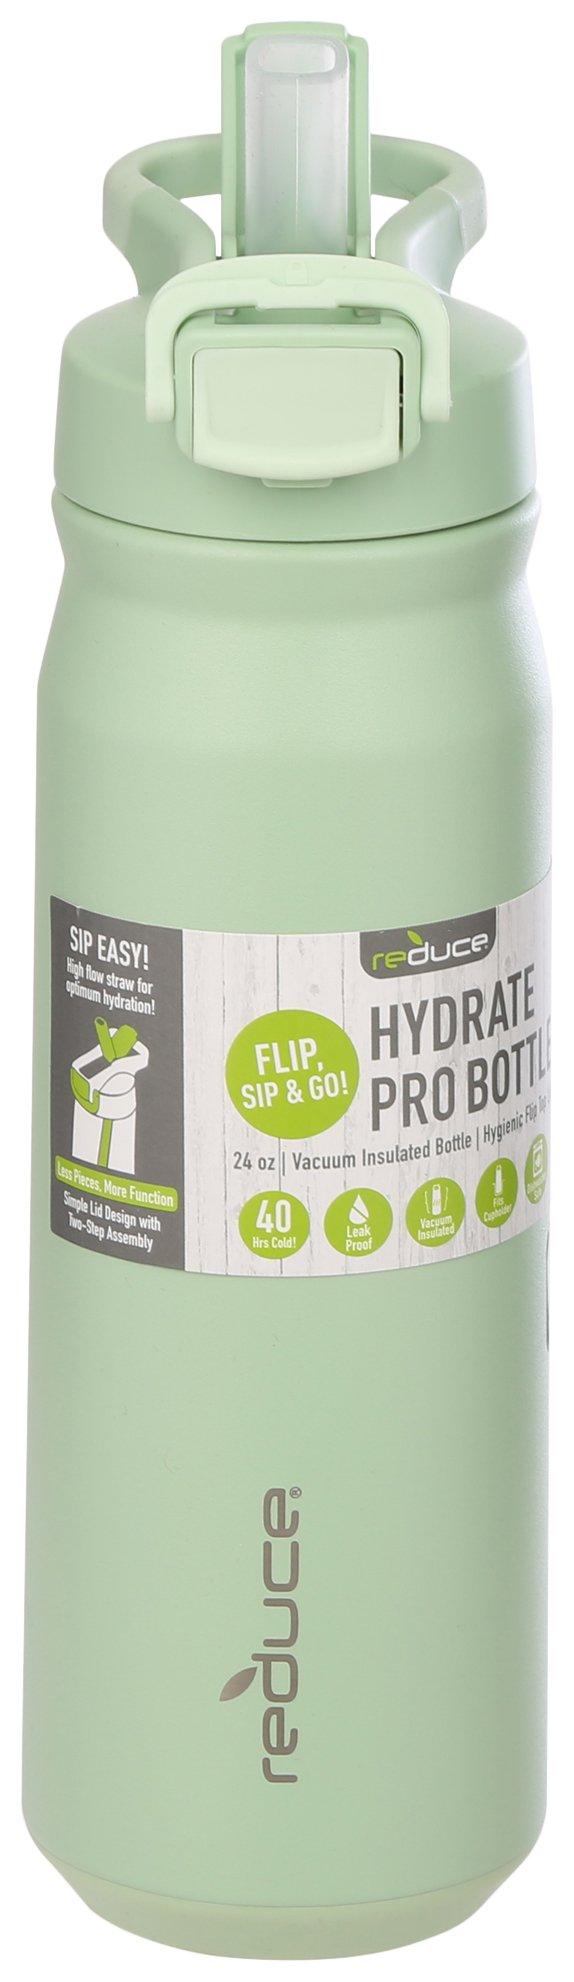 Reduce 24oz Hydrate Pro Bottle